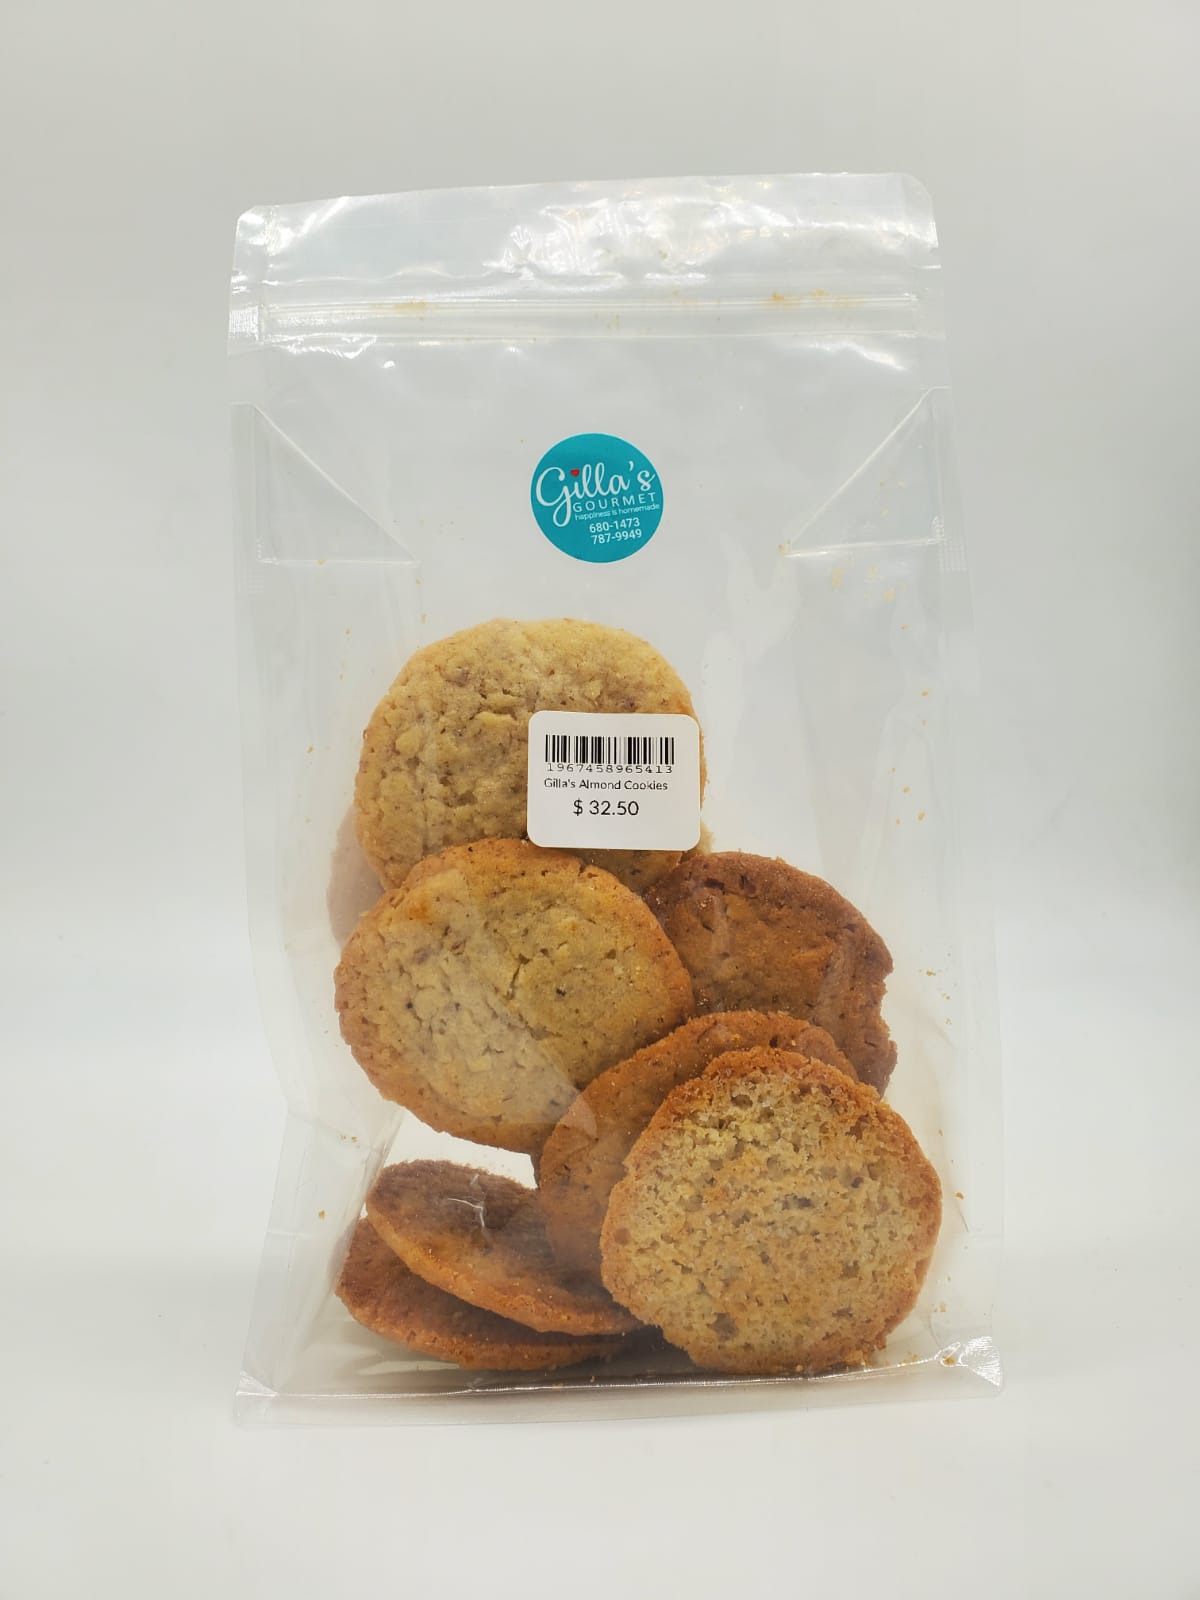 Gilla's Almond Cookies